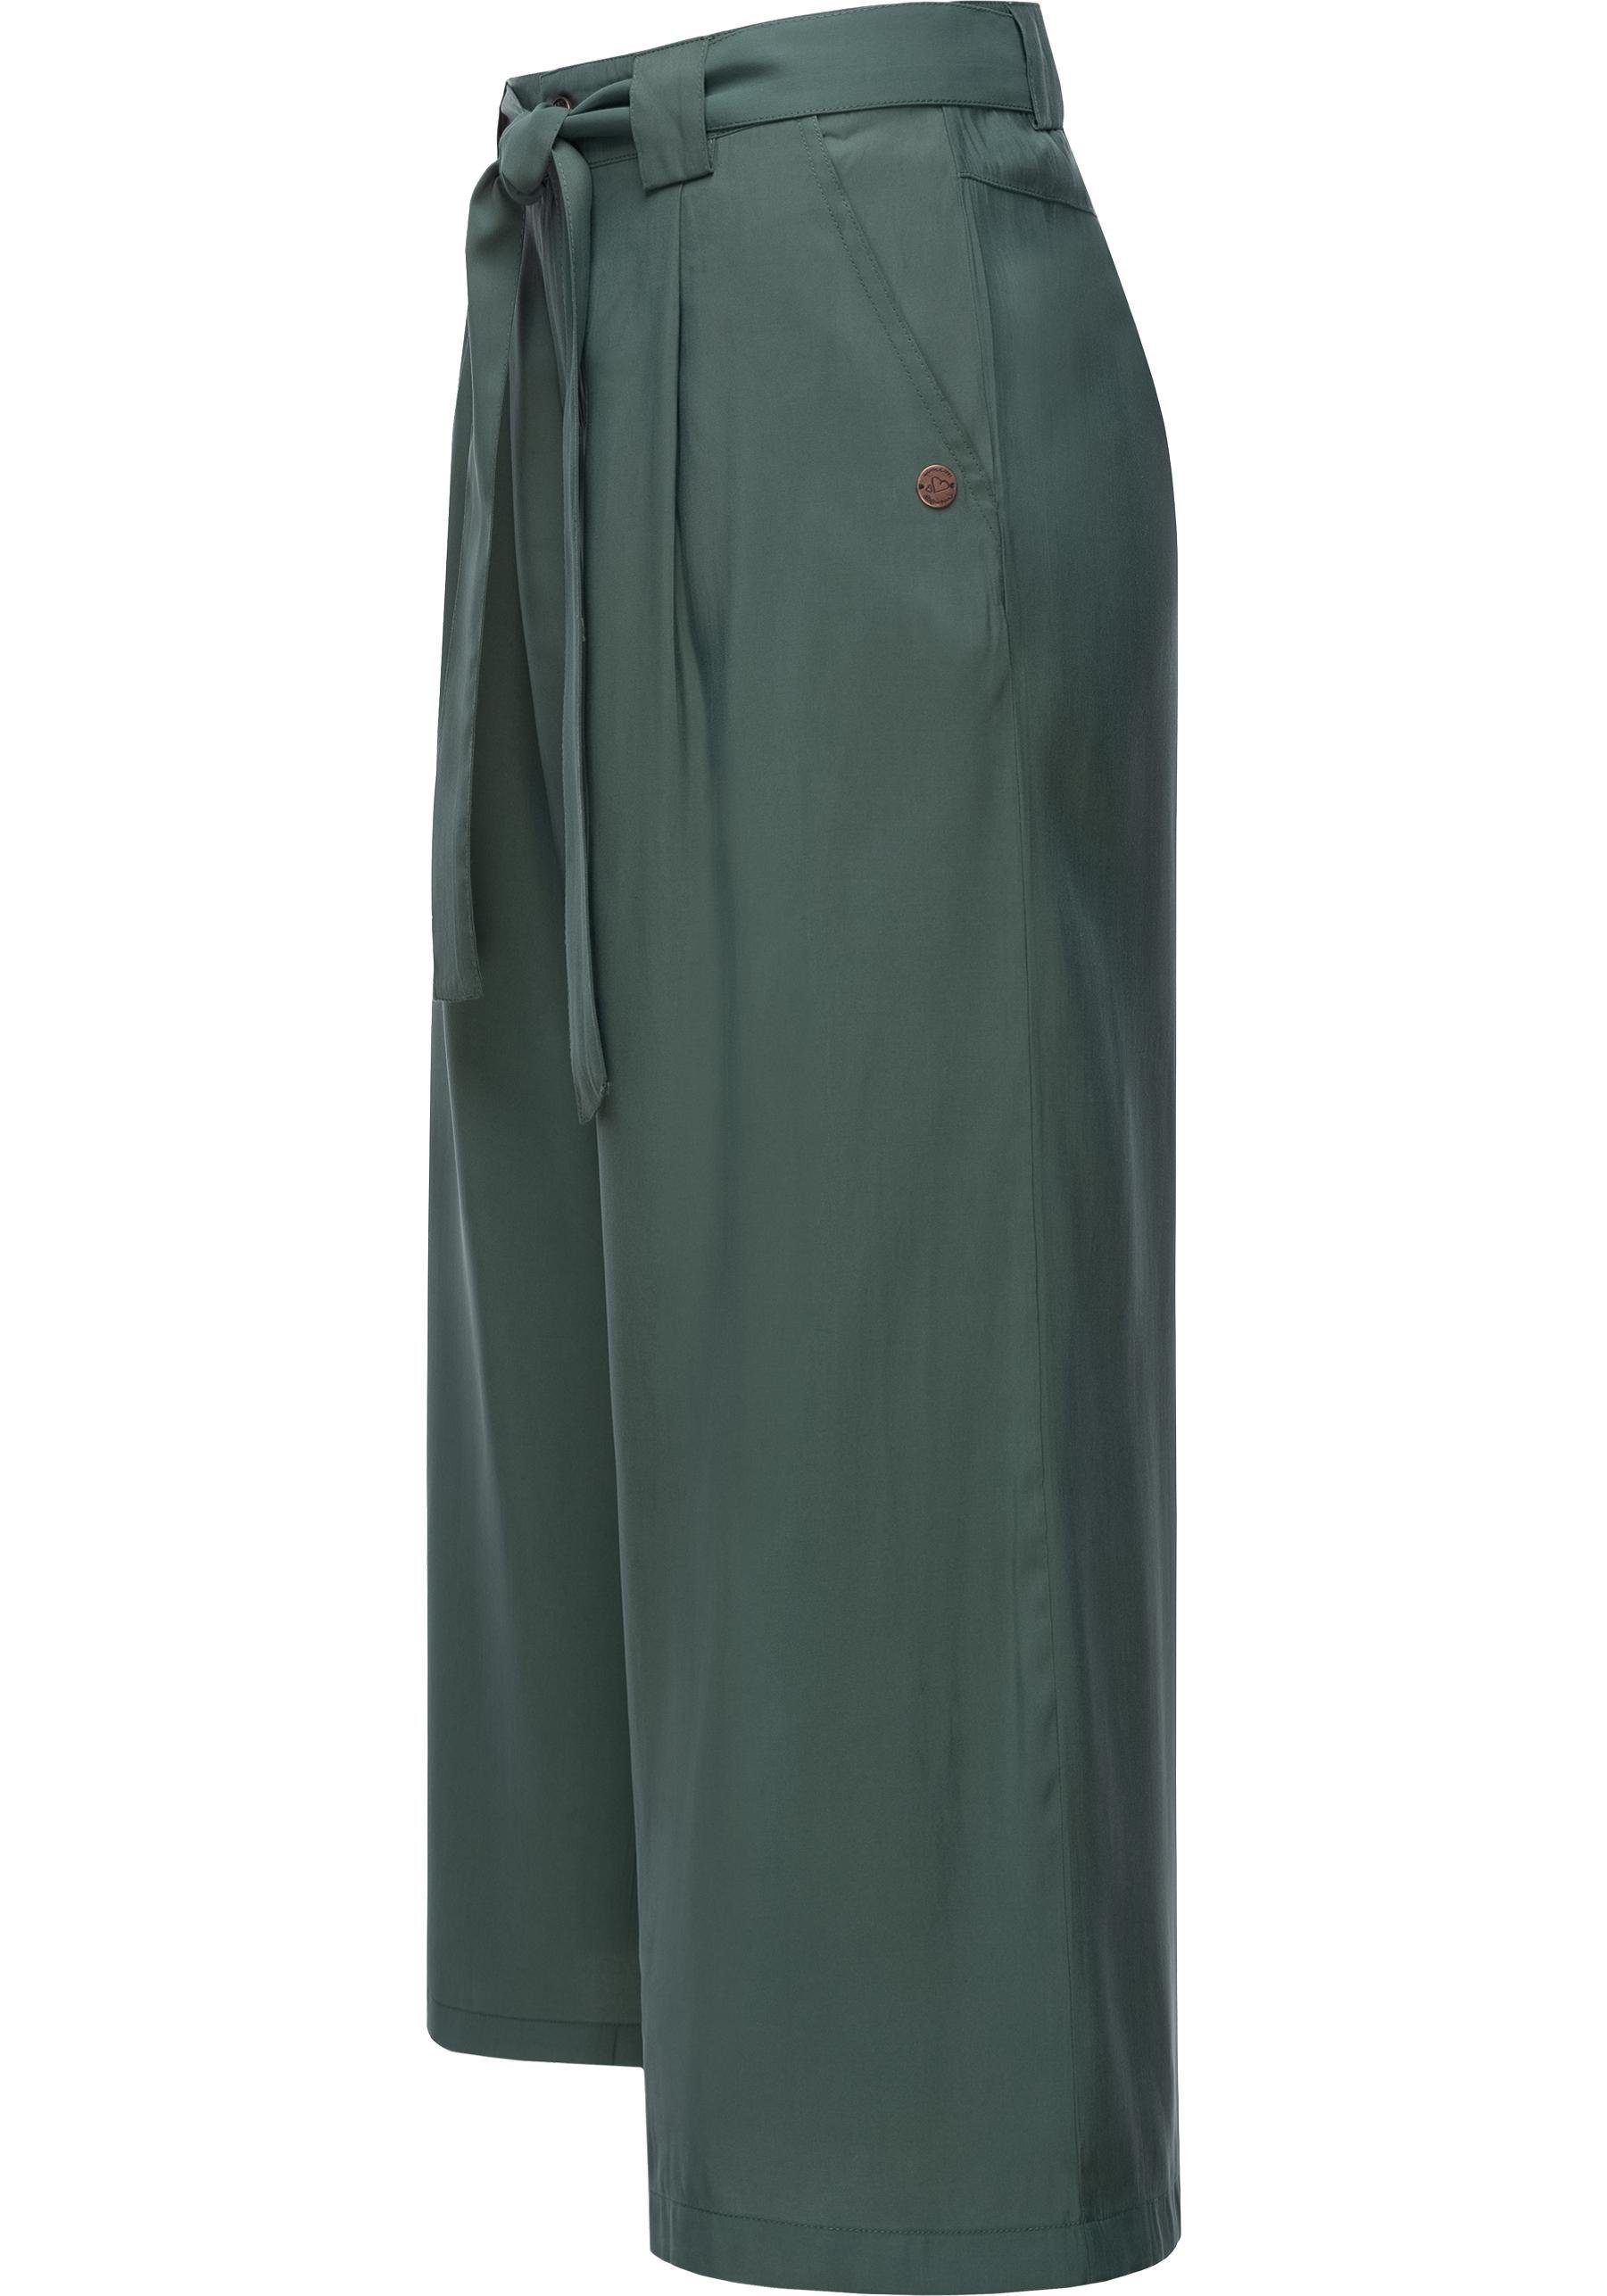 Hose Ragwear mit dunkelgrün Stoffhose Gürtel Yarai Culotte Stylische